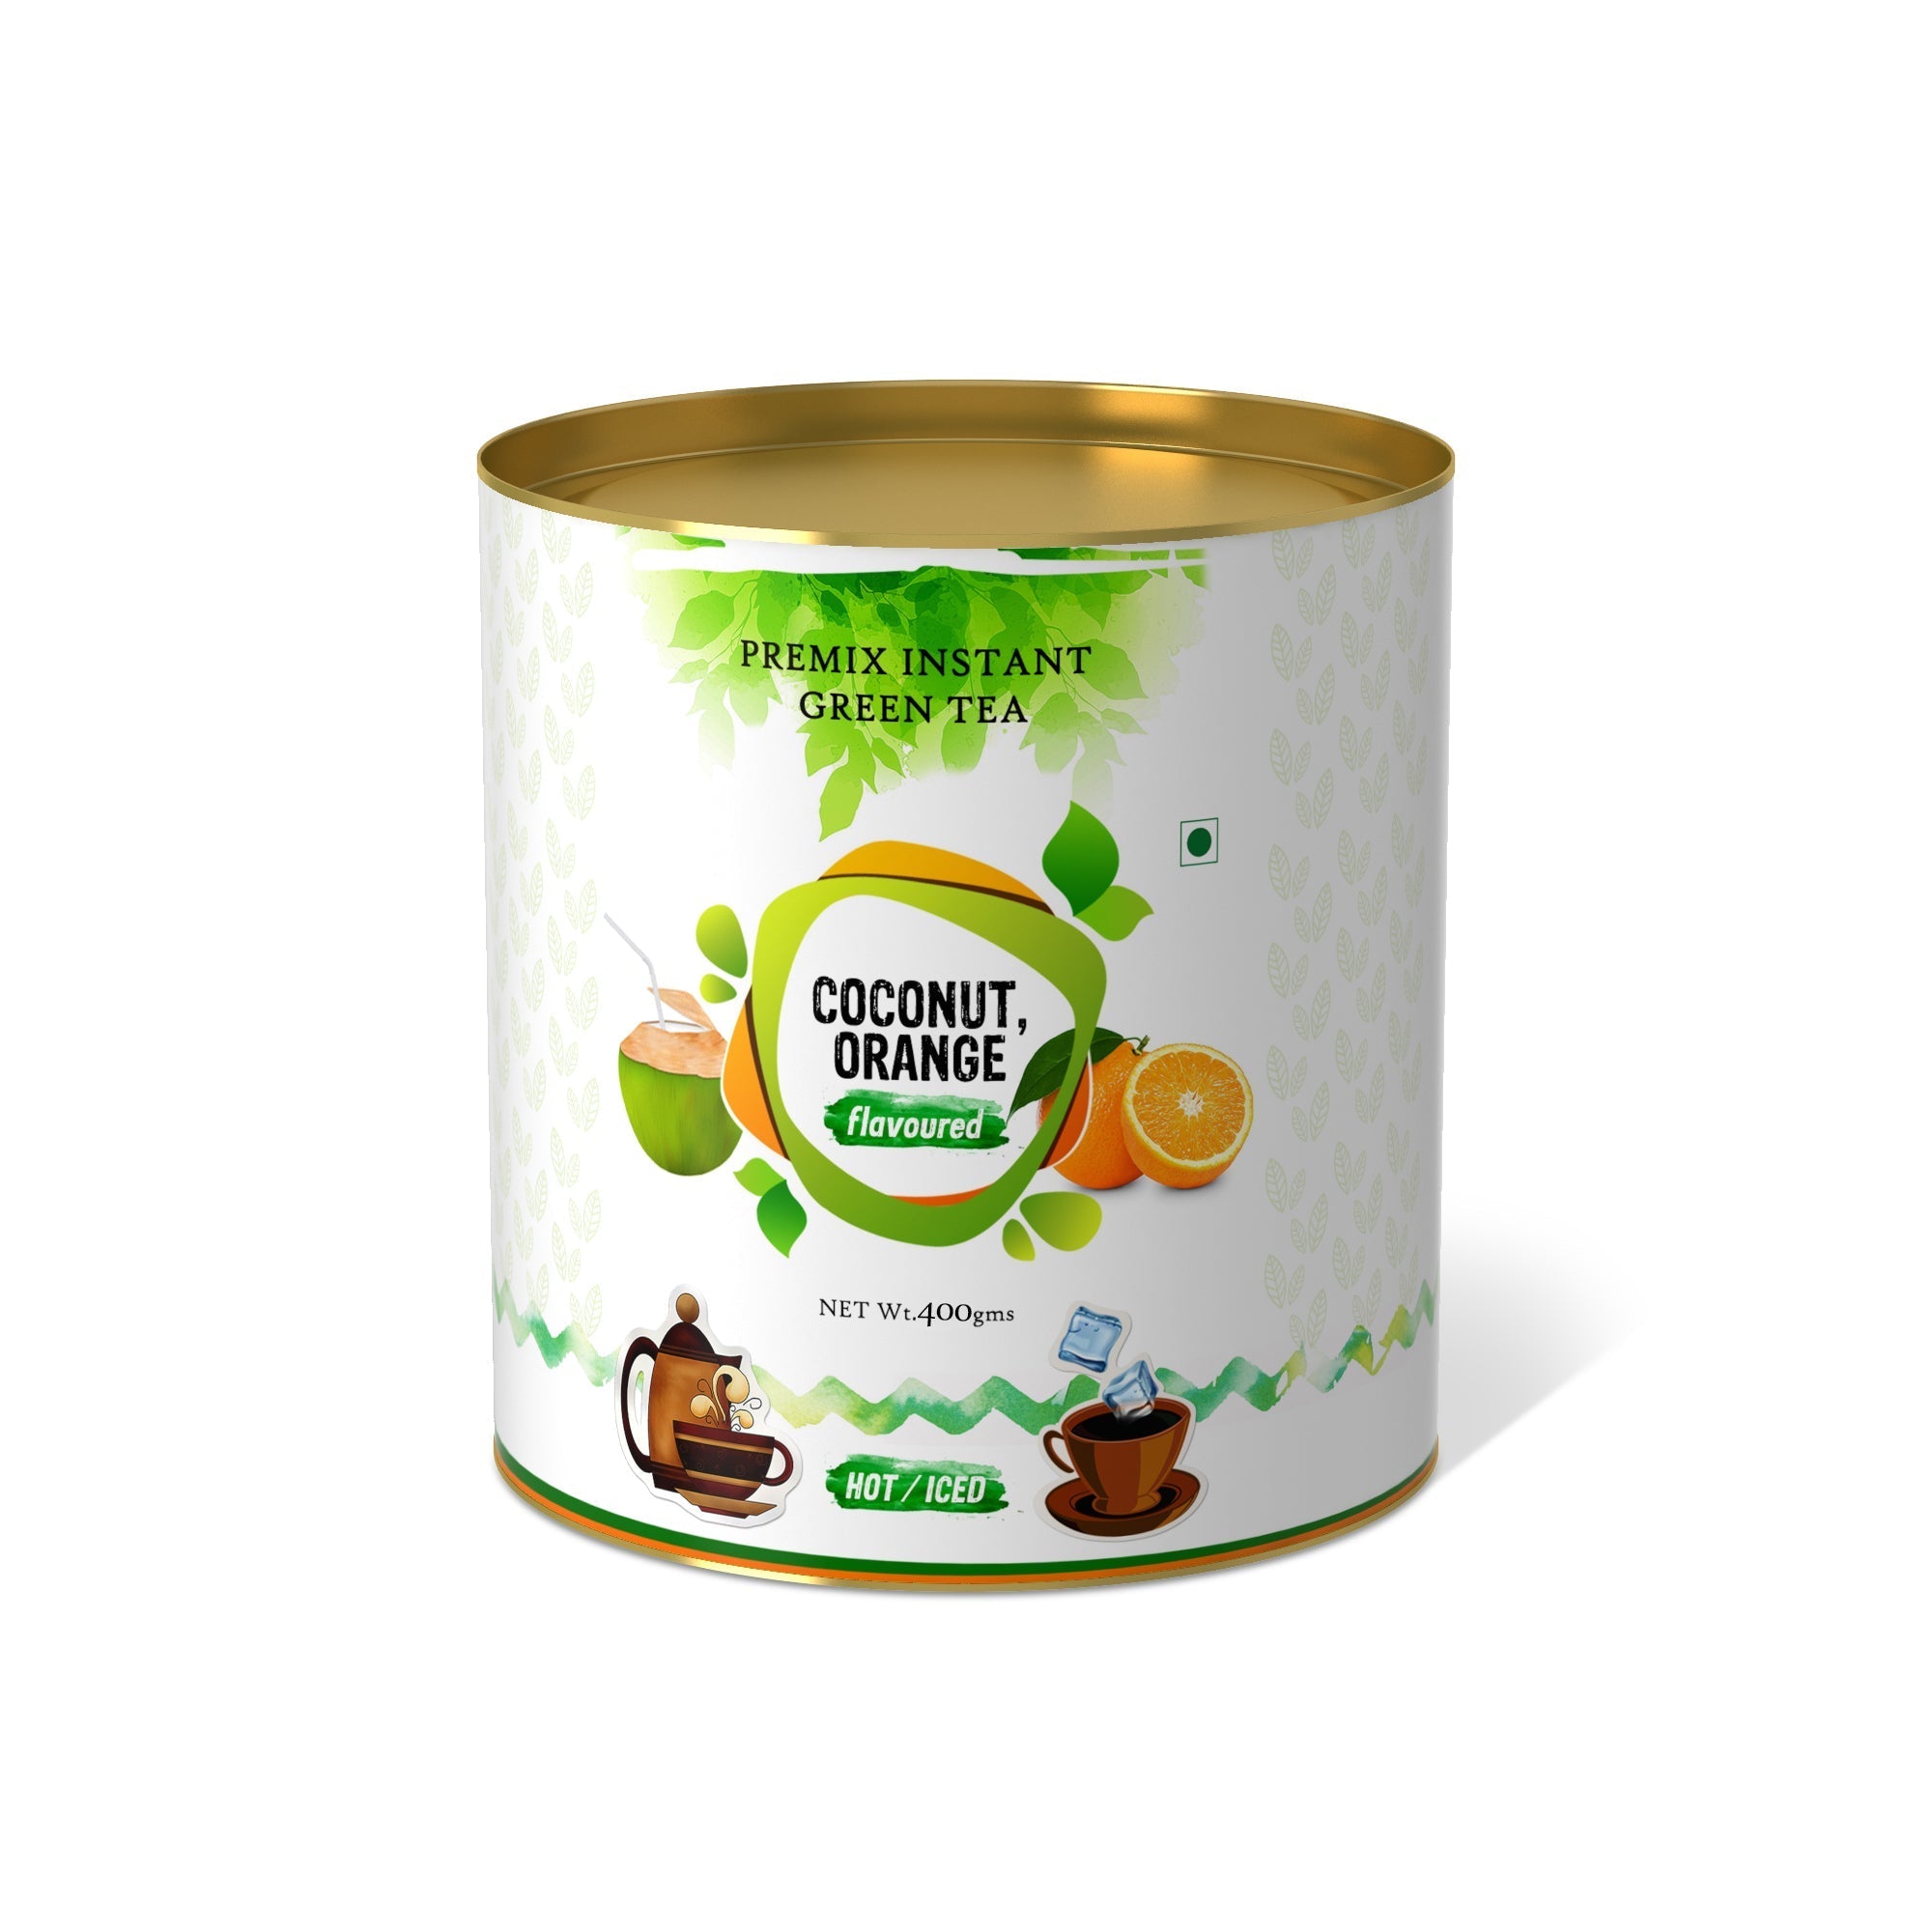 Cococnut Orange Flavored Instant Green Tea - 400 gms